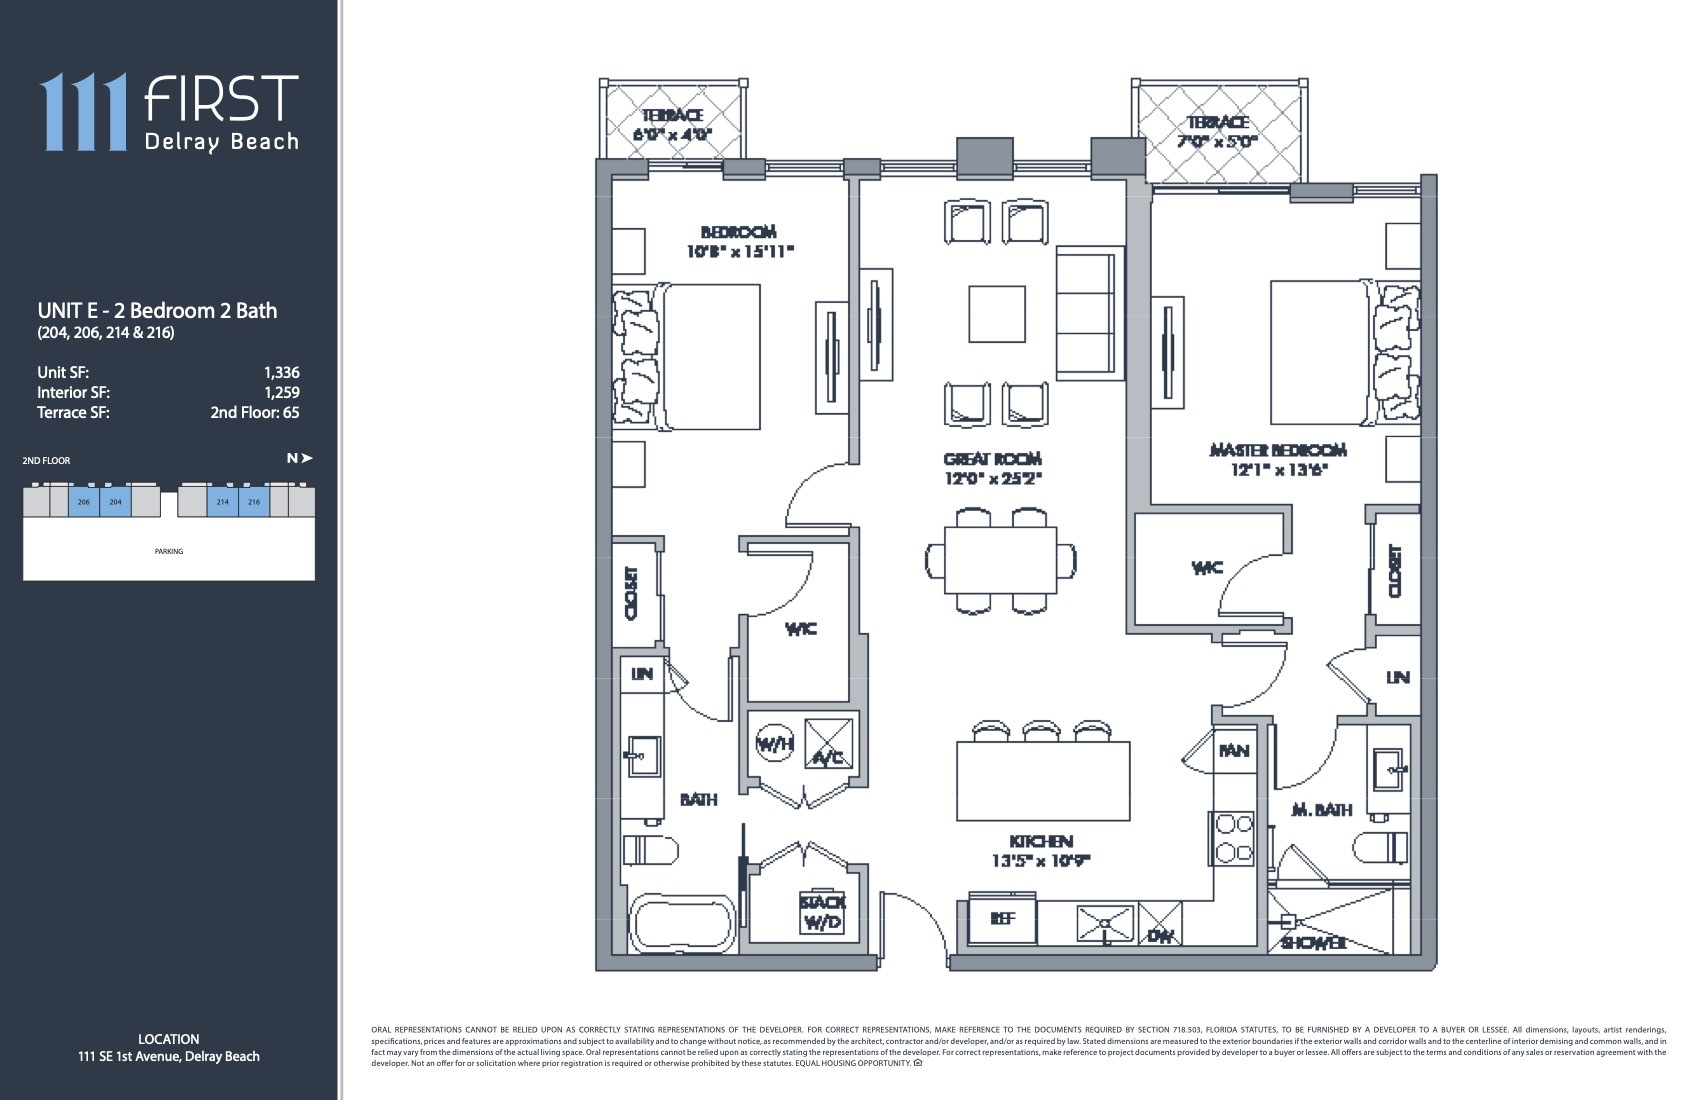 Floor Plan for 111 First Delray Floorplans, Unit E